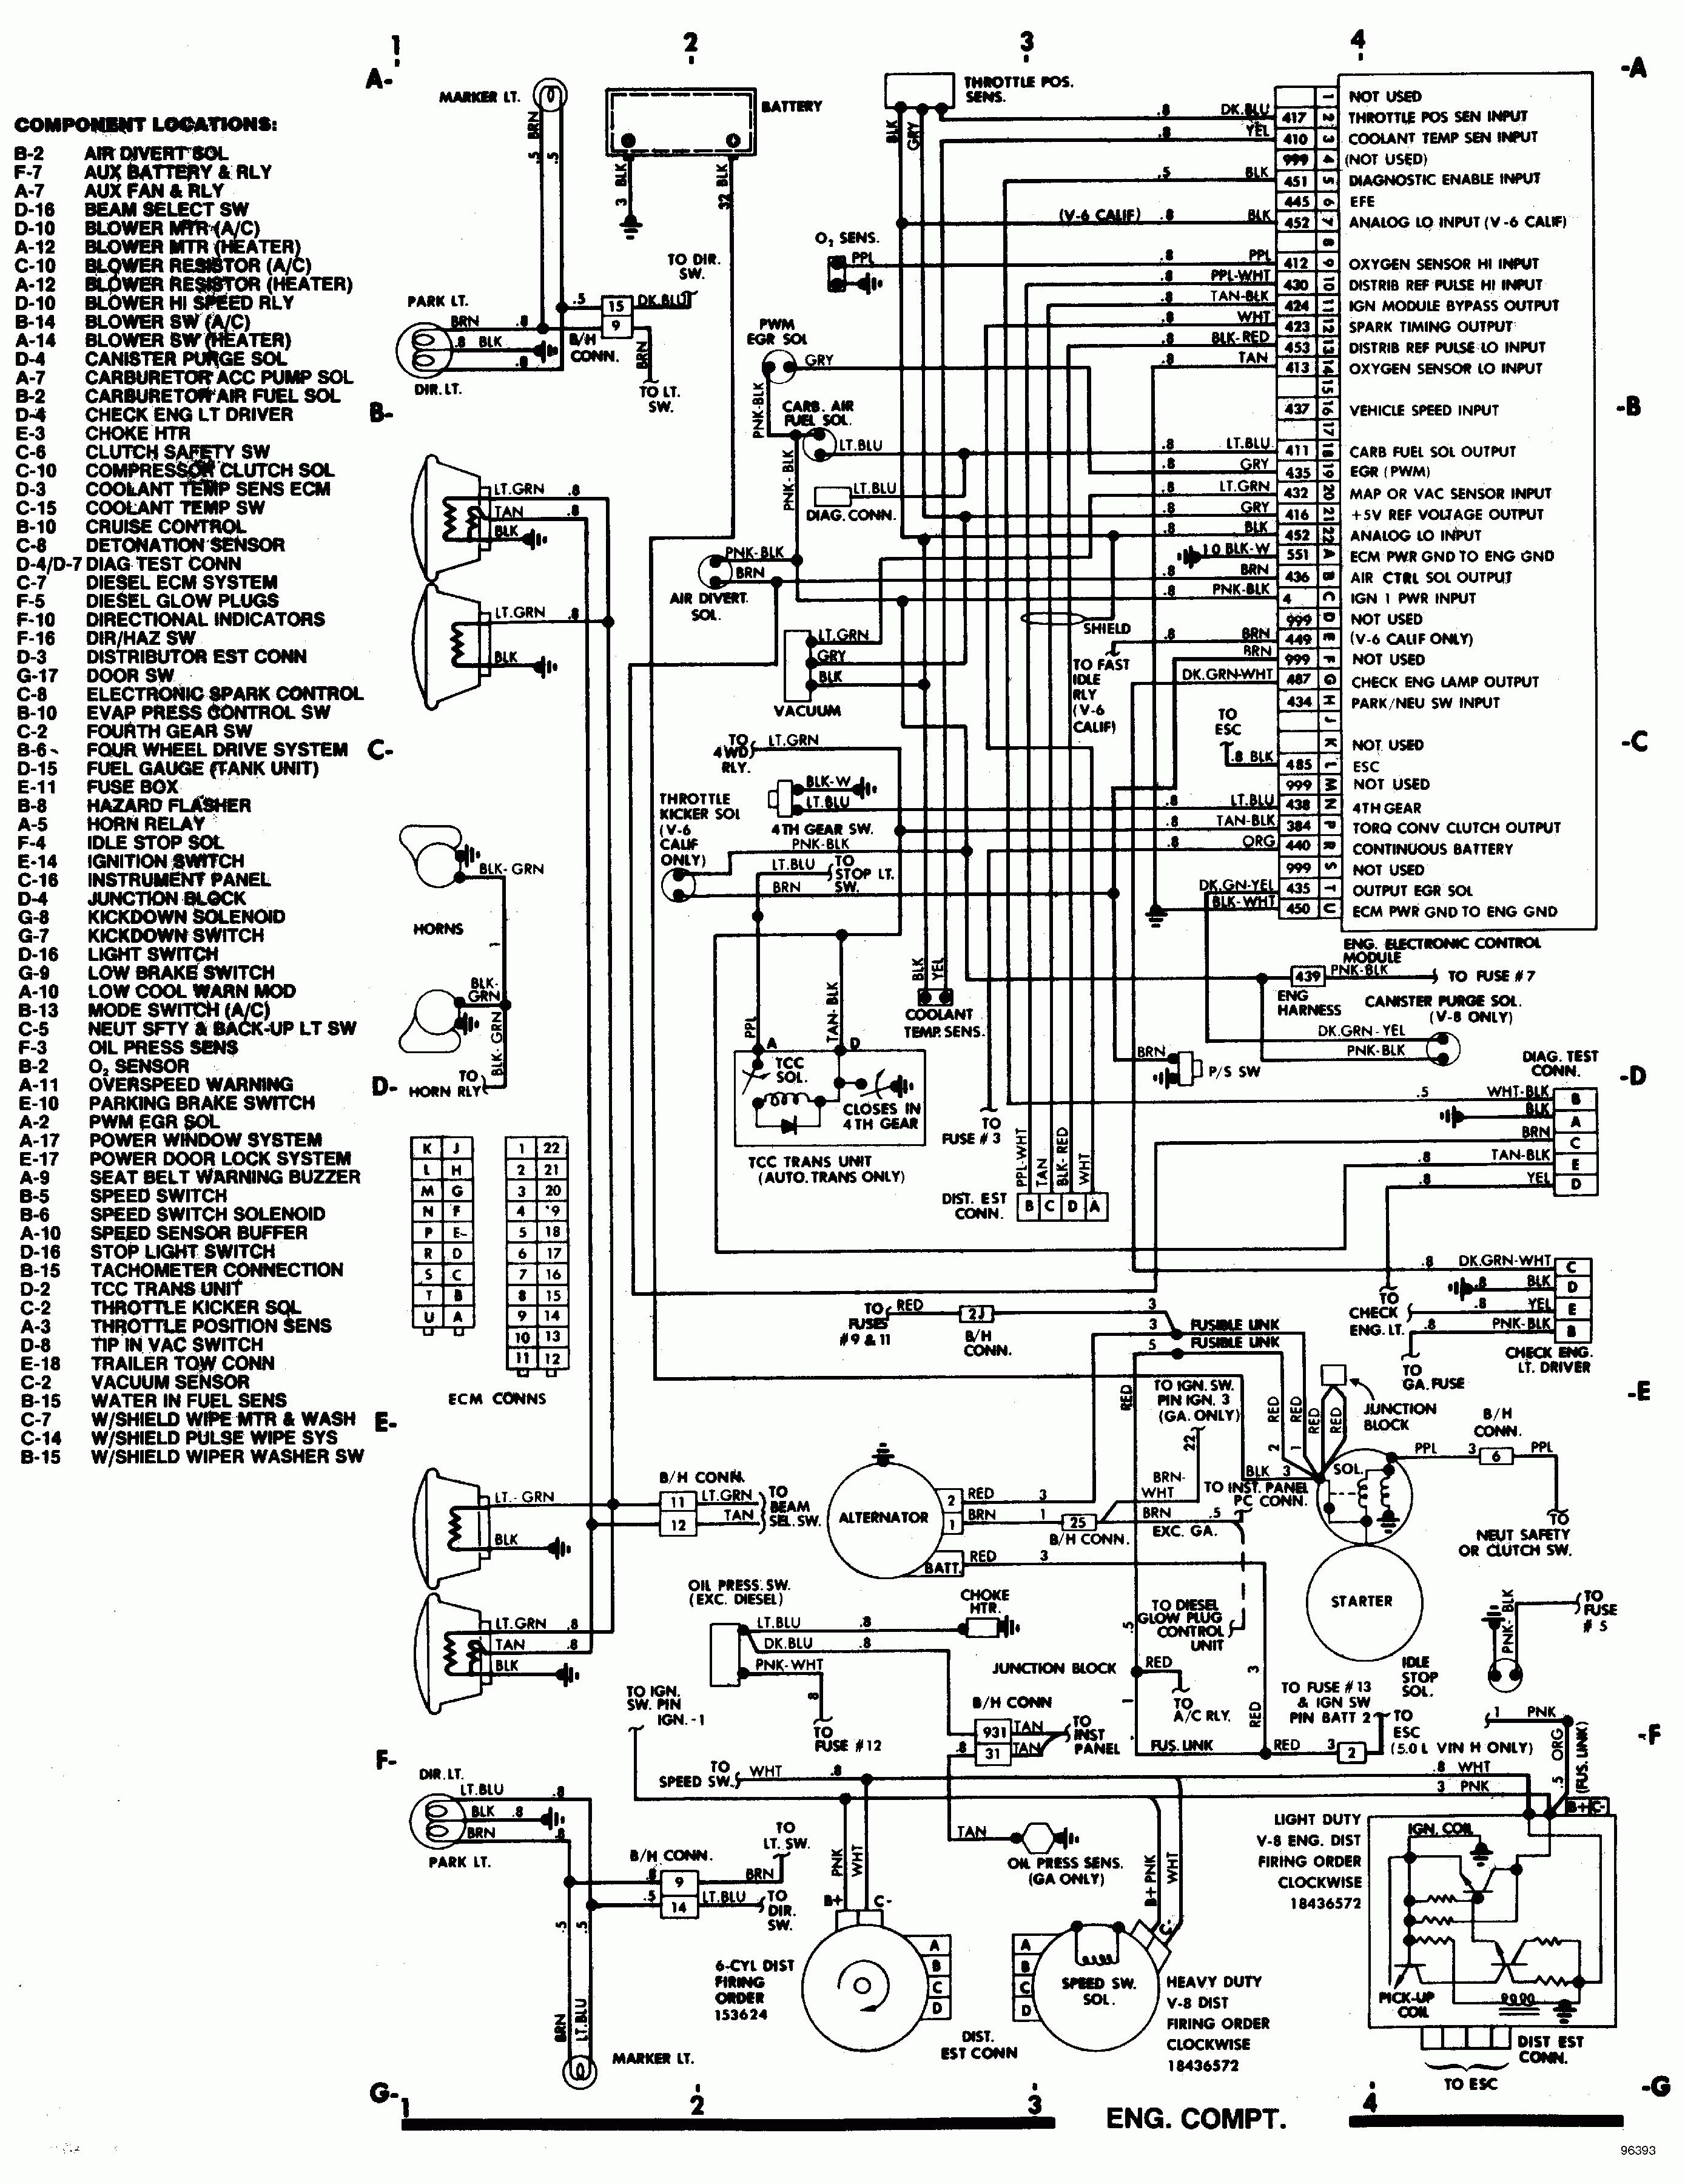 Ecm Motor Wiring Diagram Chevrolet S | Wiring Diagram - Ecm Motor Wiring Diagram